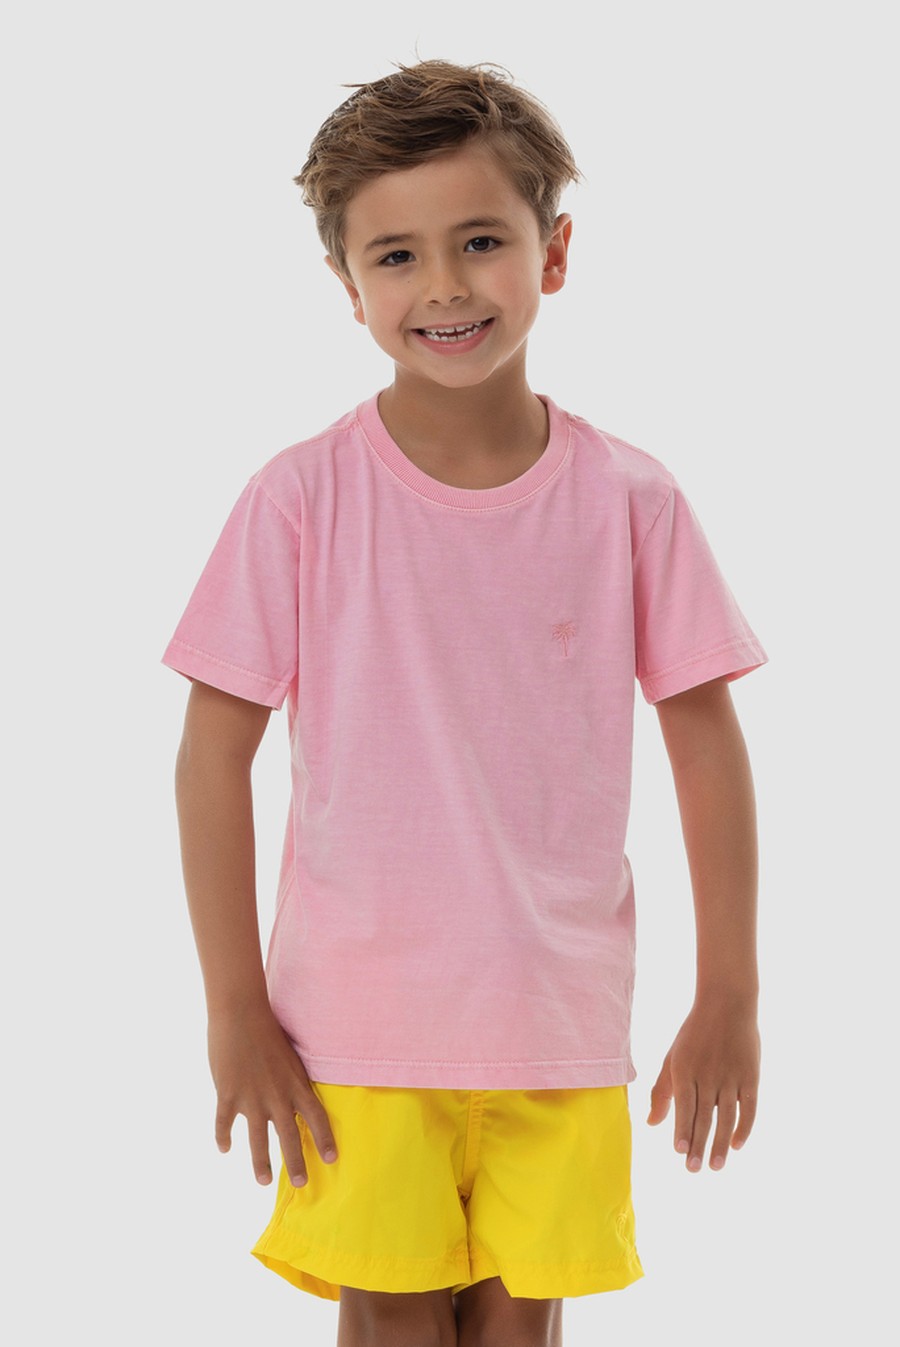 tshirt infantil rosa 8624 mer bleu